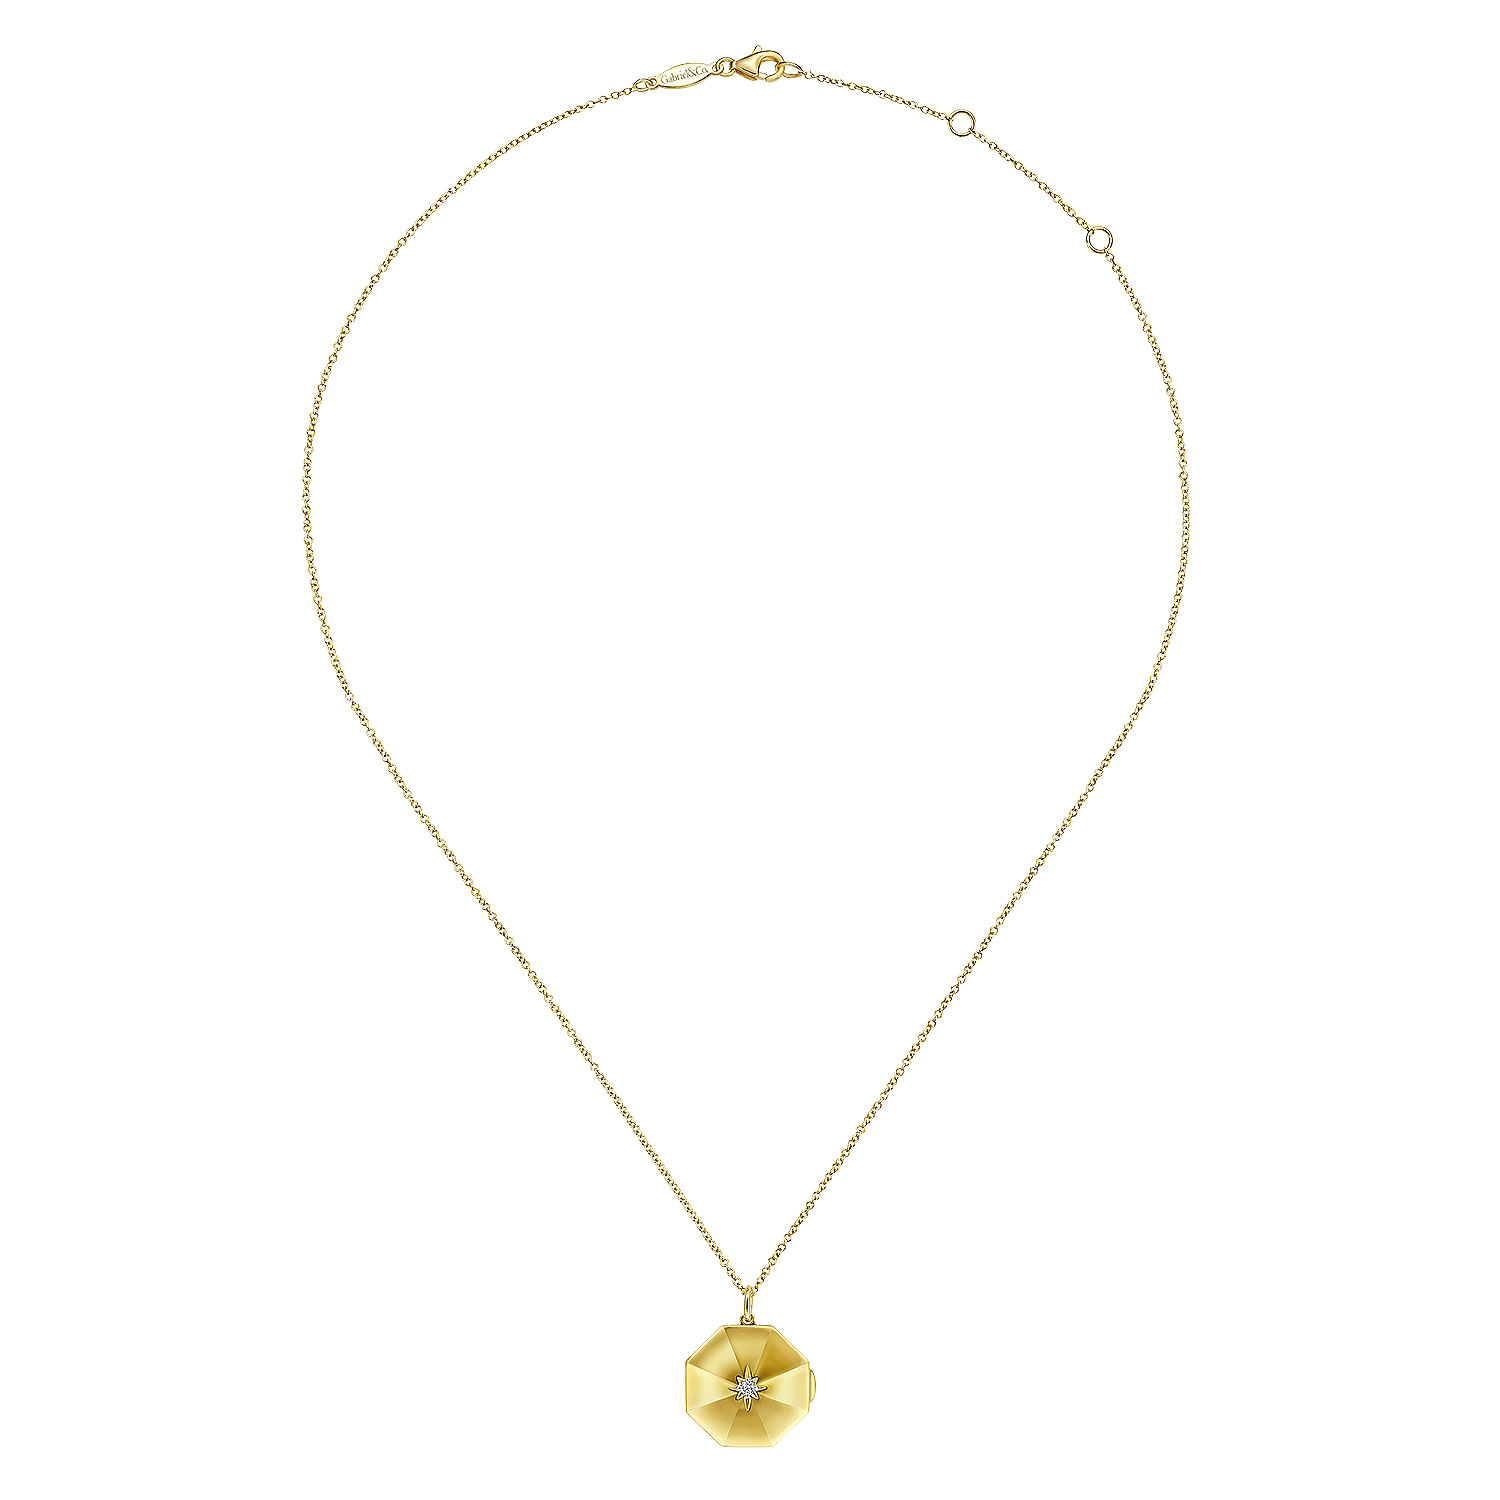 14K Yellow Gold Octagonal Locket Necklace with Diamond Star Center